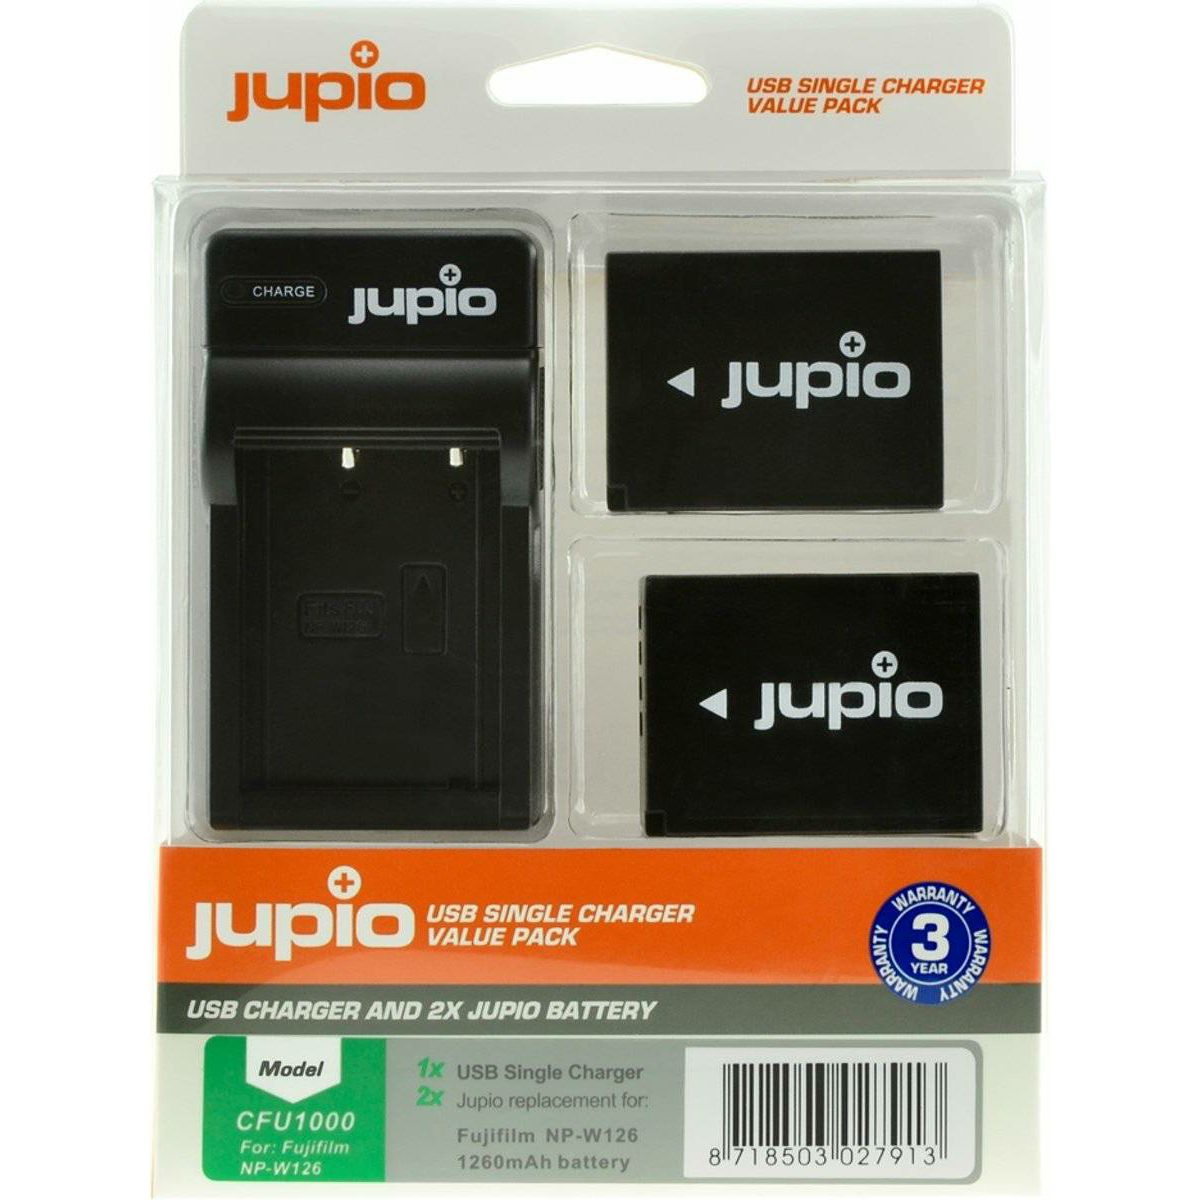 Jupio KIT 2x Battery NP-W126 + USB Single Charger komplet punjač i dvije baterije za Fujifilm FinePix T500, HS30EXR, HS33EXR, HS50EXR, X-Pro1, X-A1, X-A2, X-E1, X-E2, X-T1, X-T10 (CFU1000)